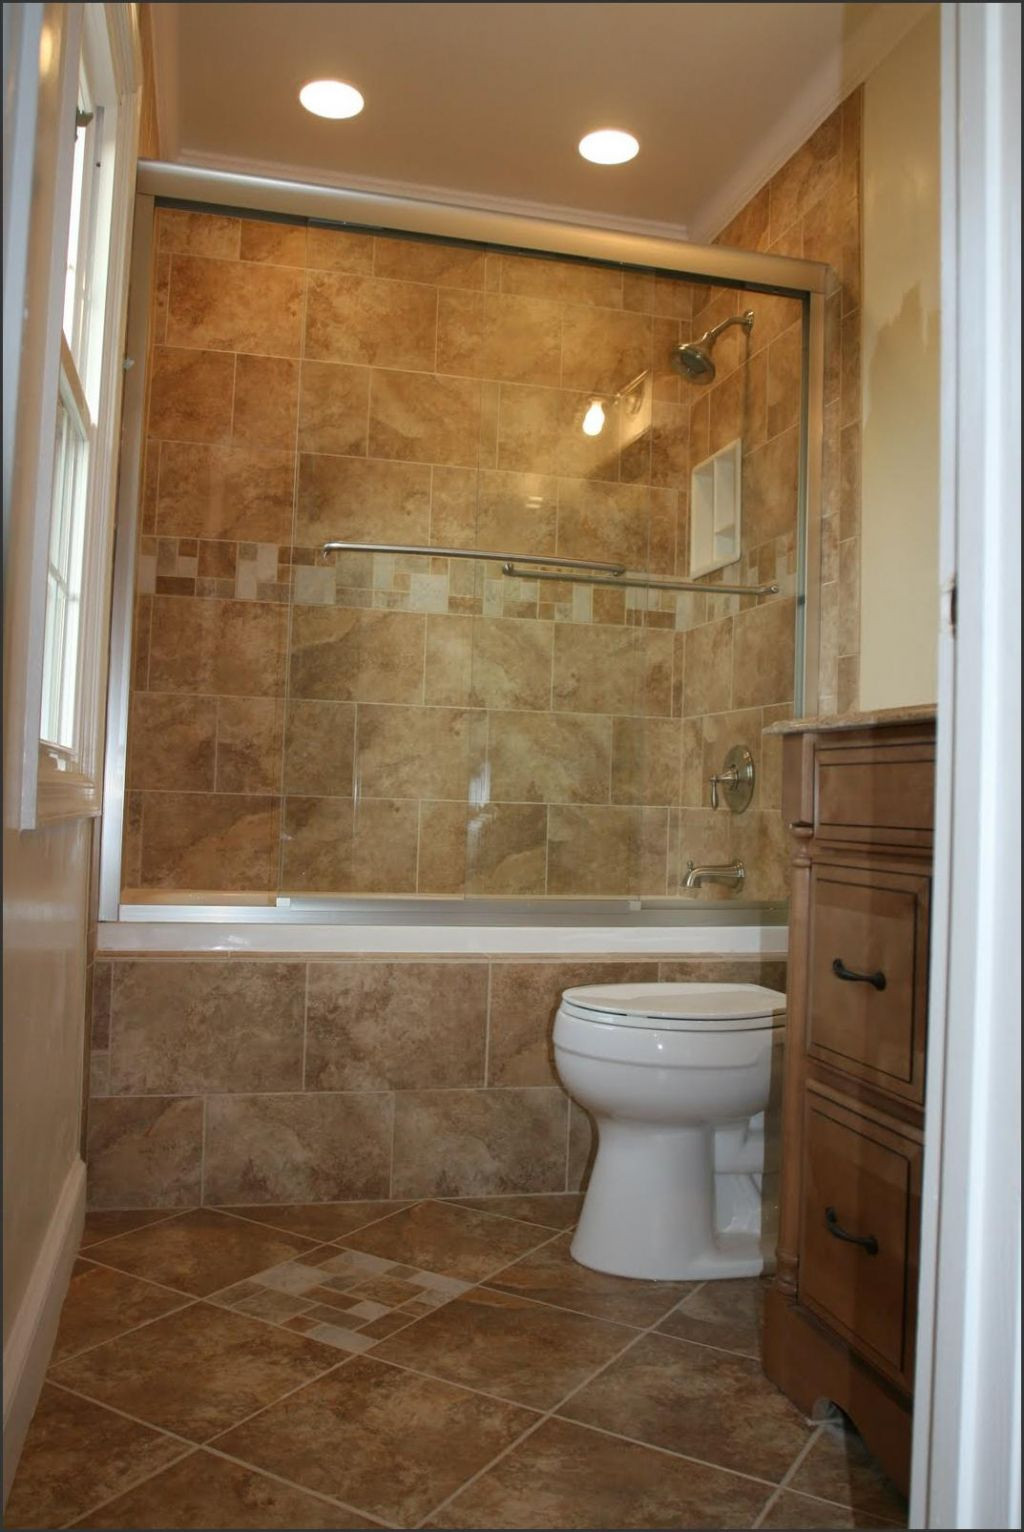 Bathroom Shower Floor Tile Ideas
 Tile Shower Ideas Affecting the Appearance of the Space